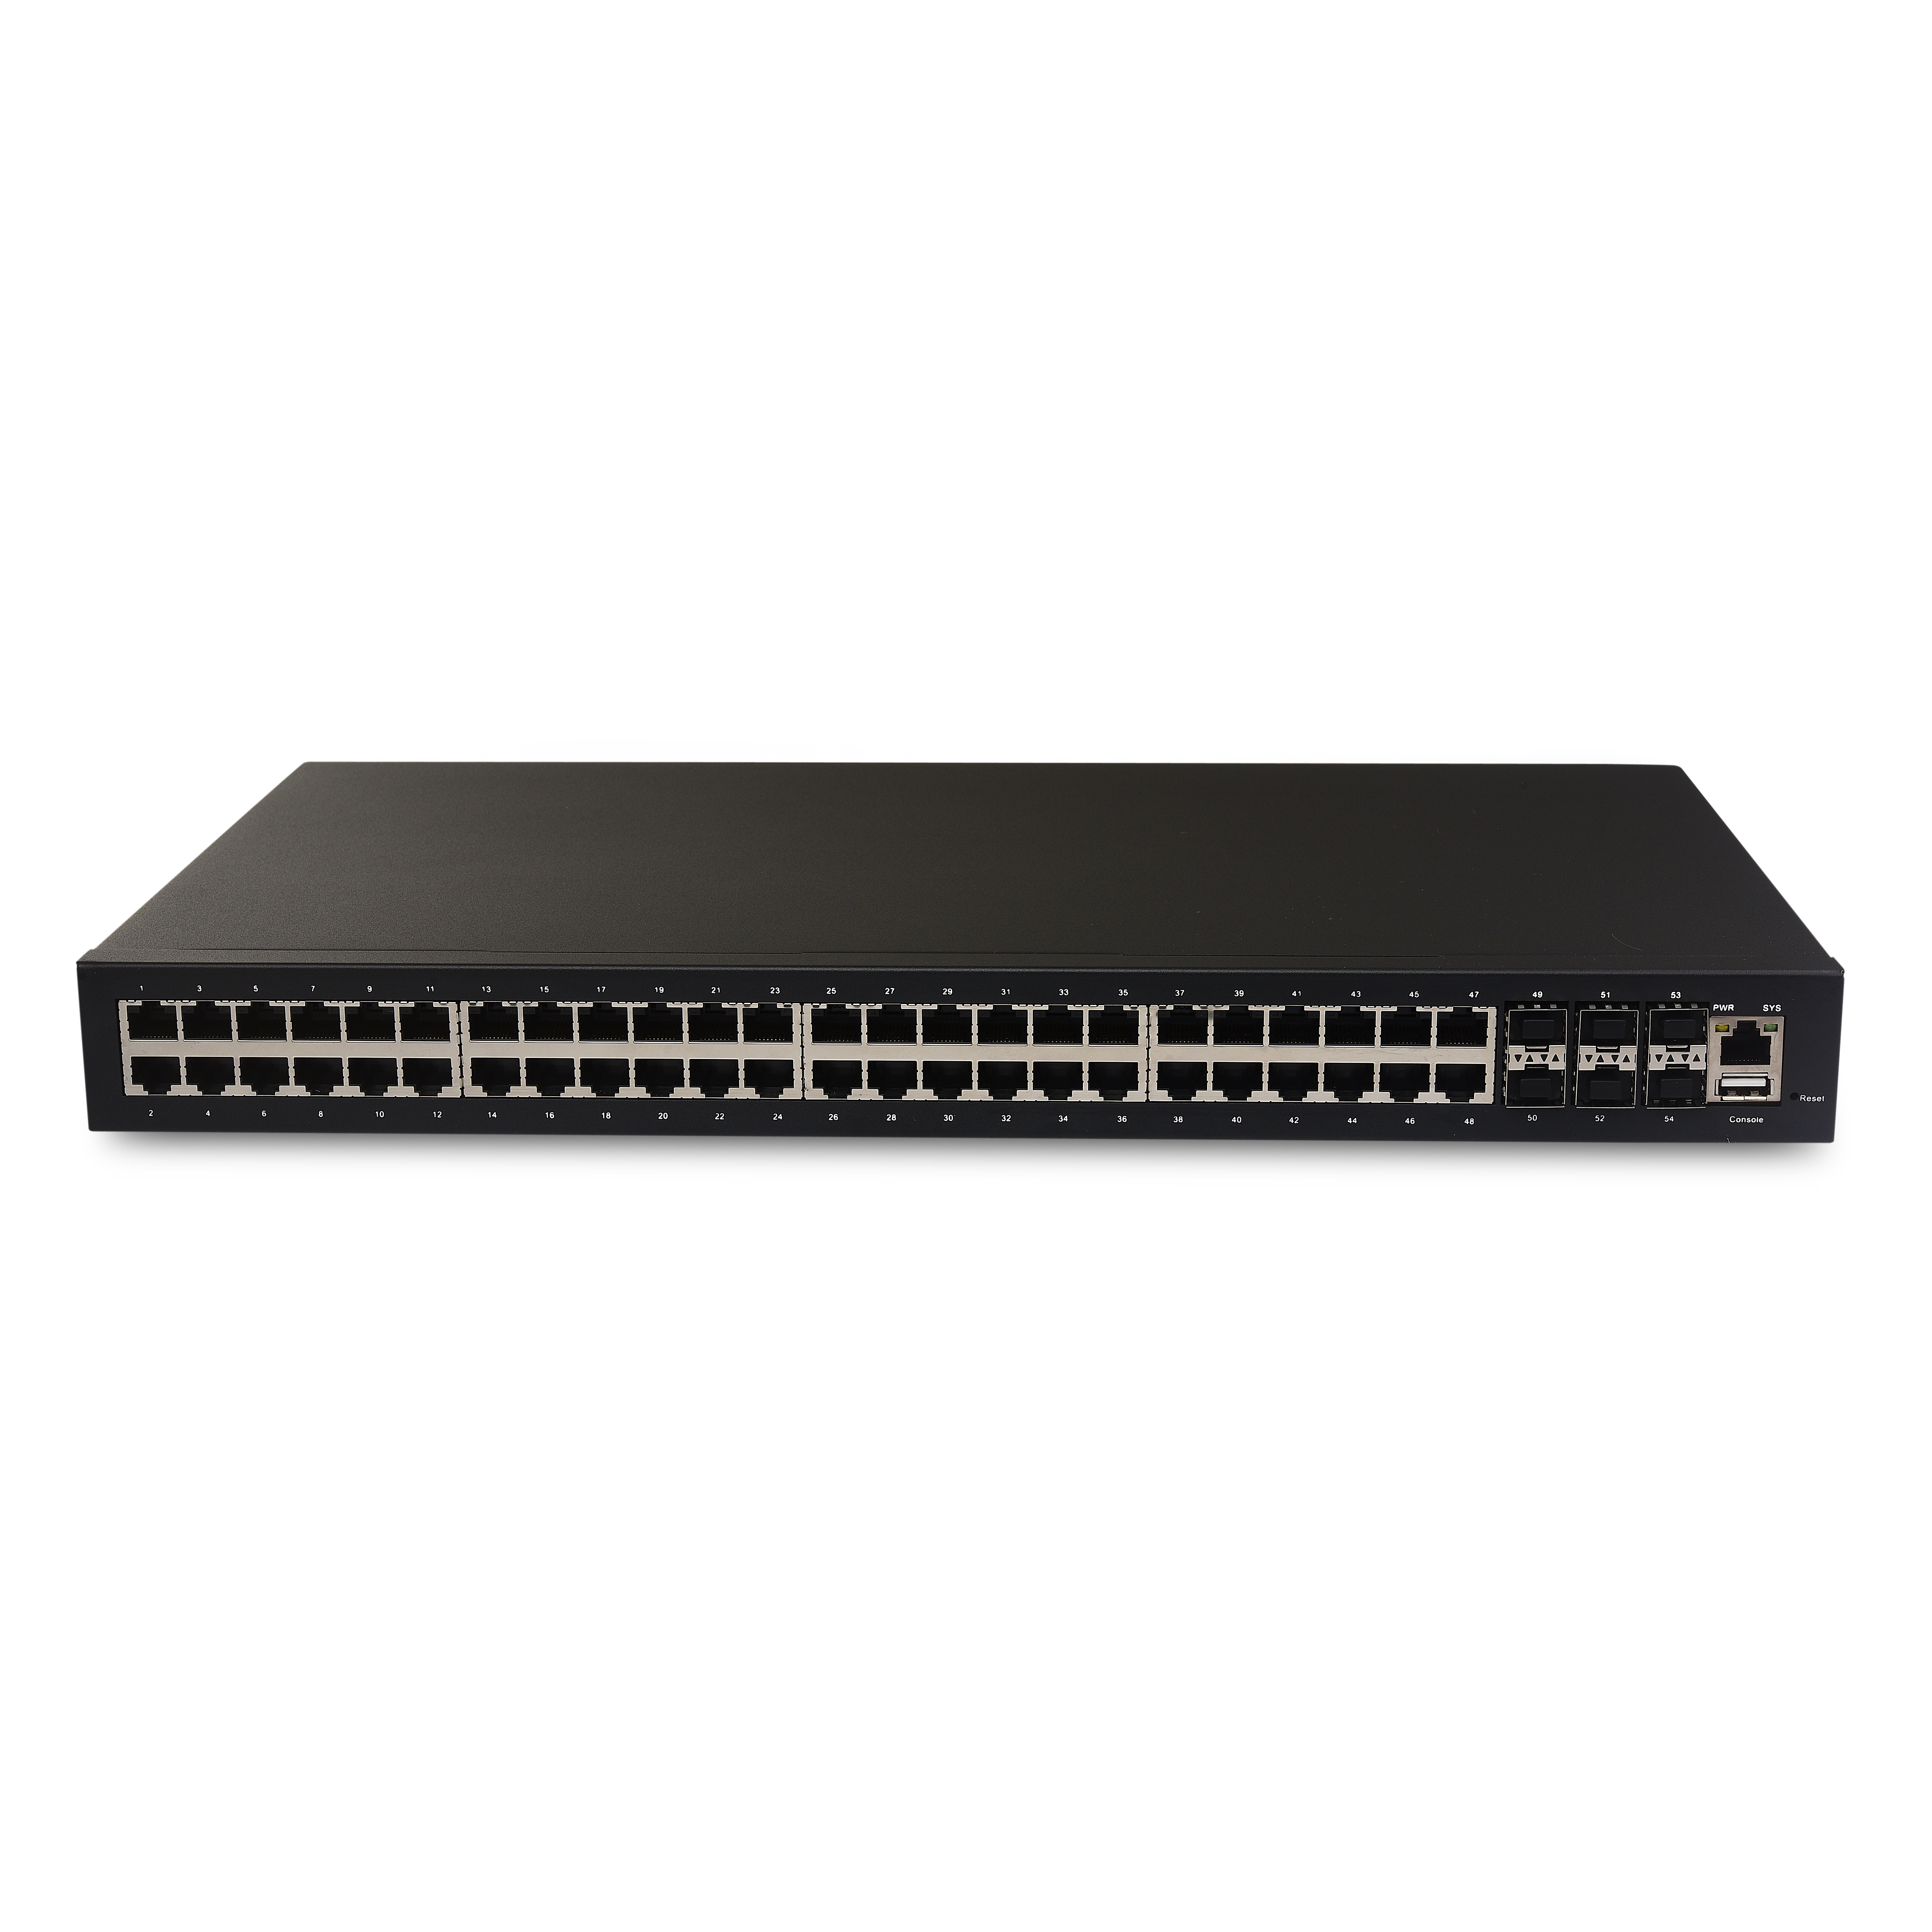 6 * 1G / 10G SFP + slot + 48 * 10/100 / 1000M palabuhan Ethernet |Diurus serat Ethernet switch JHA-SMW0648